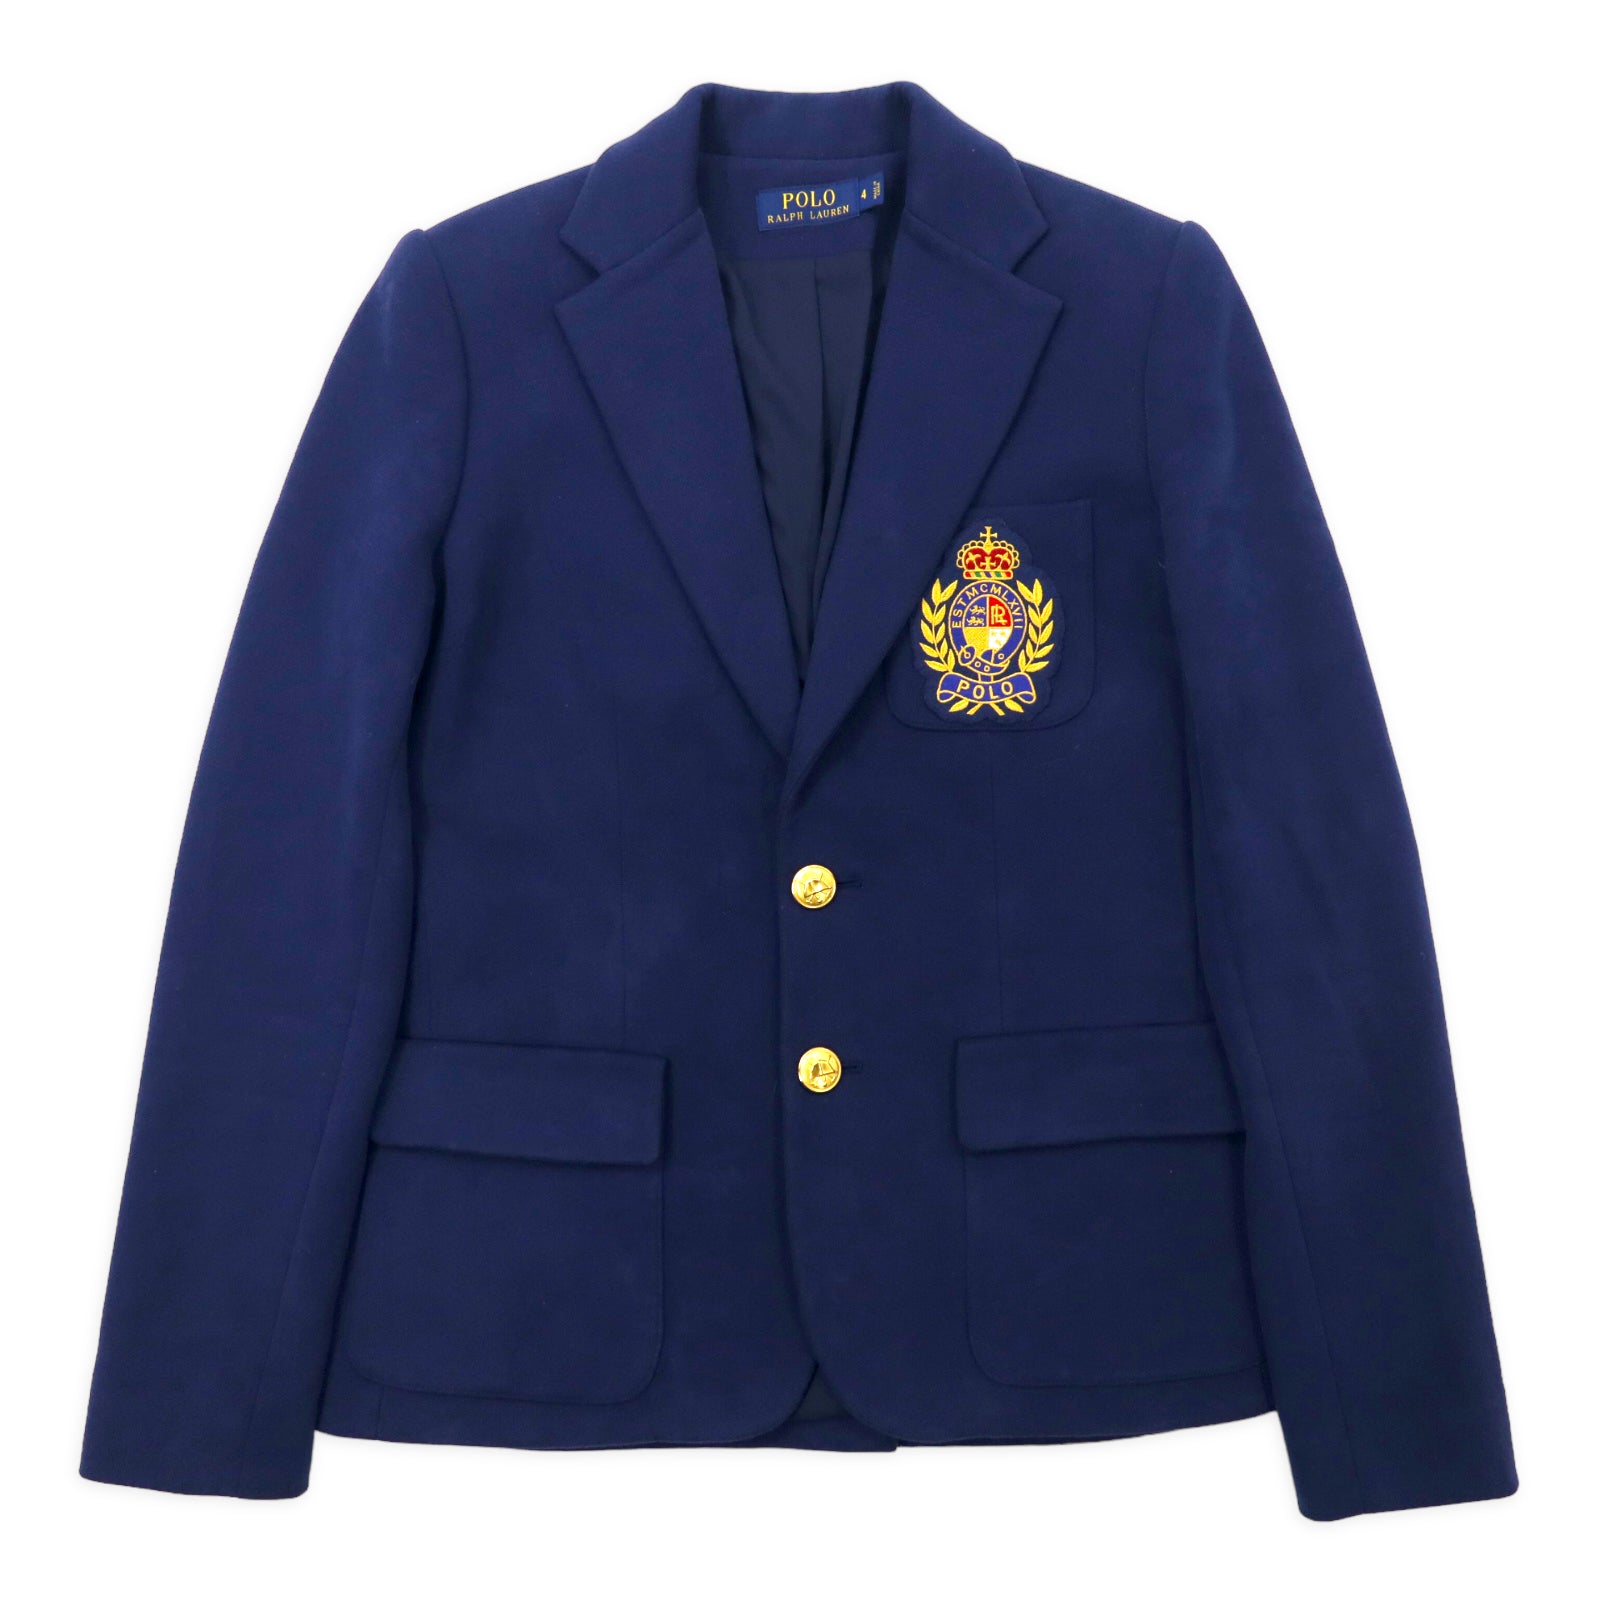 POLO RALPH LAUREN School Jacket Blazer 4 Navy Cotton 